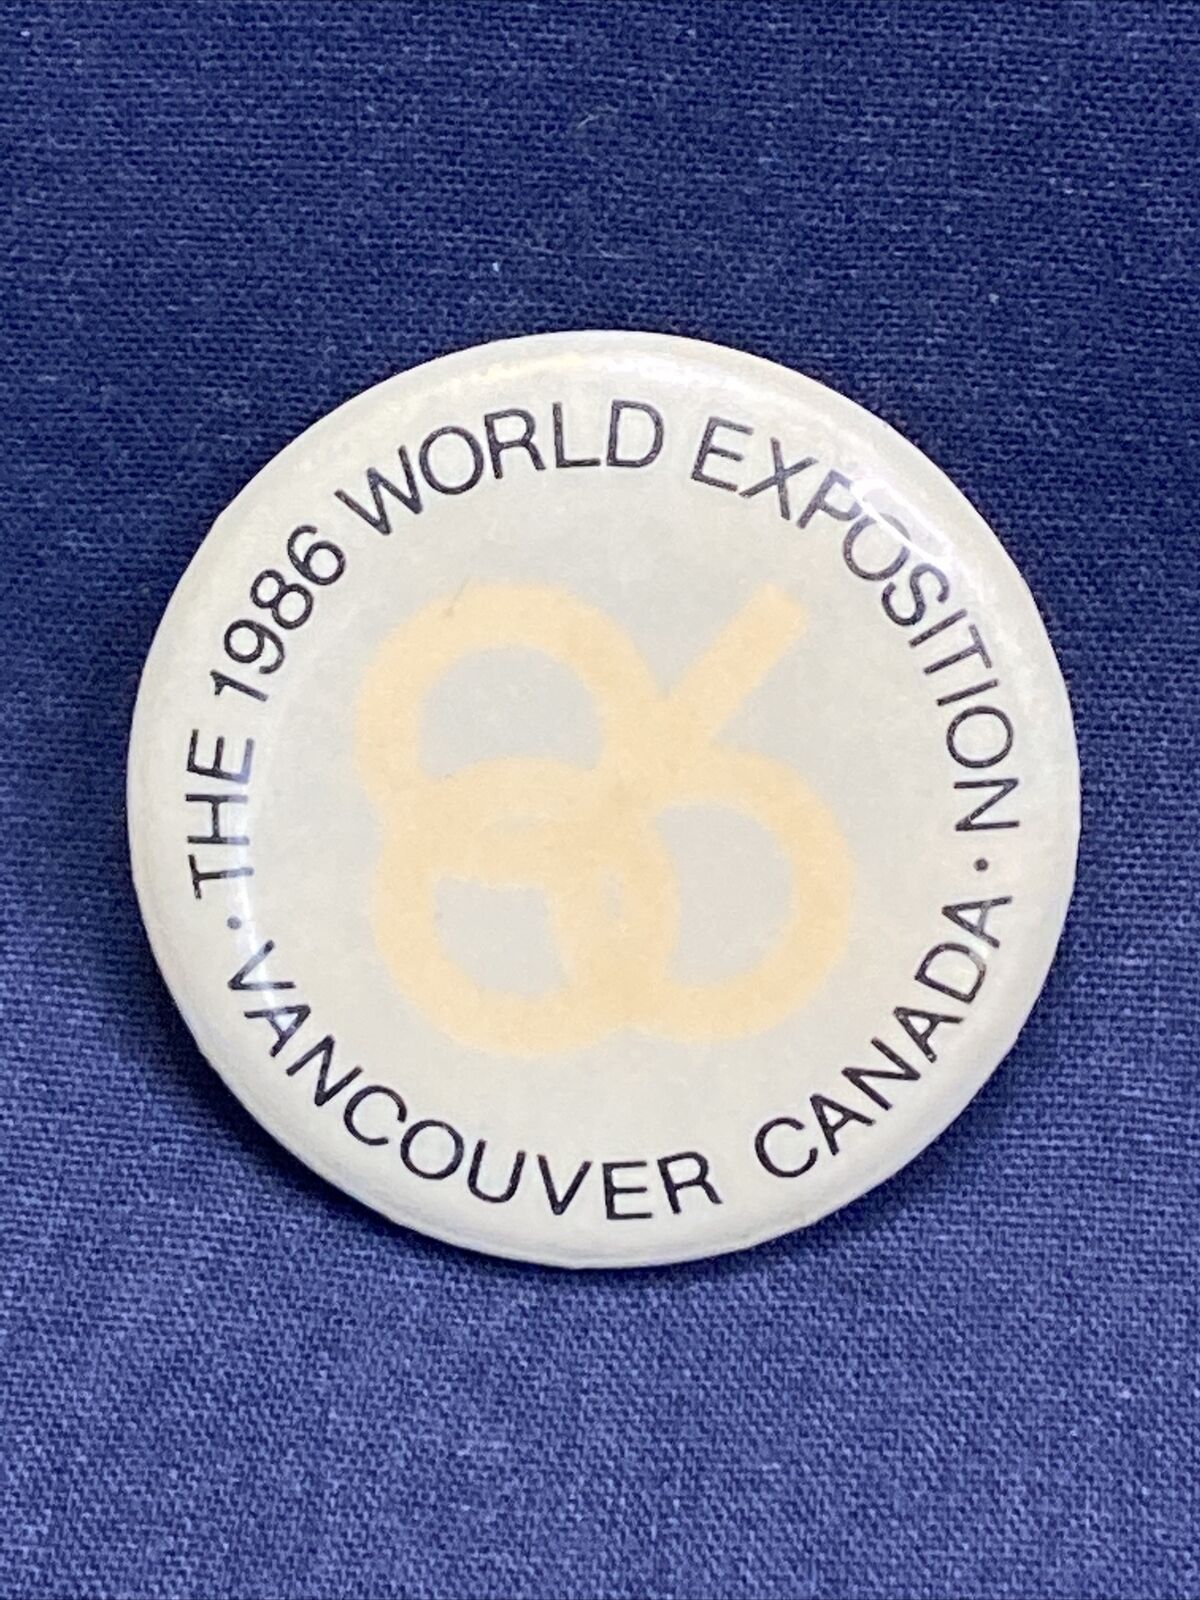 The 1986 World Exposition Vancouver Canada Button 1.25”